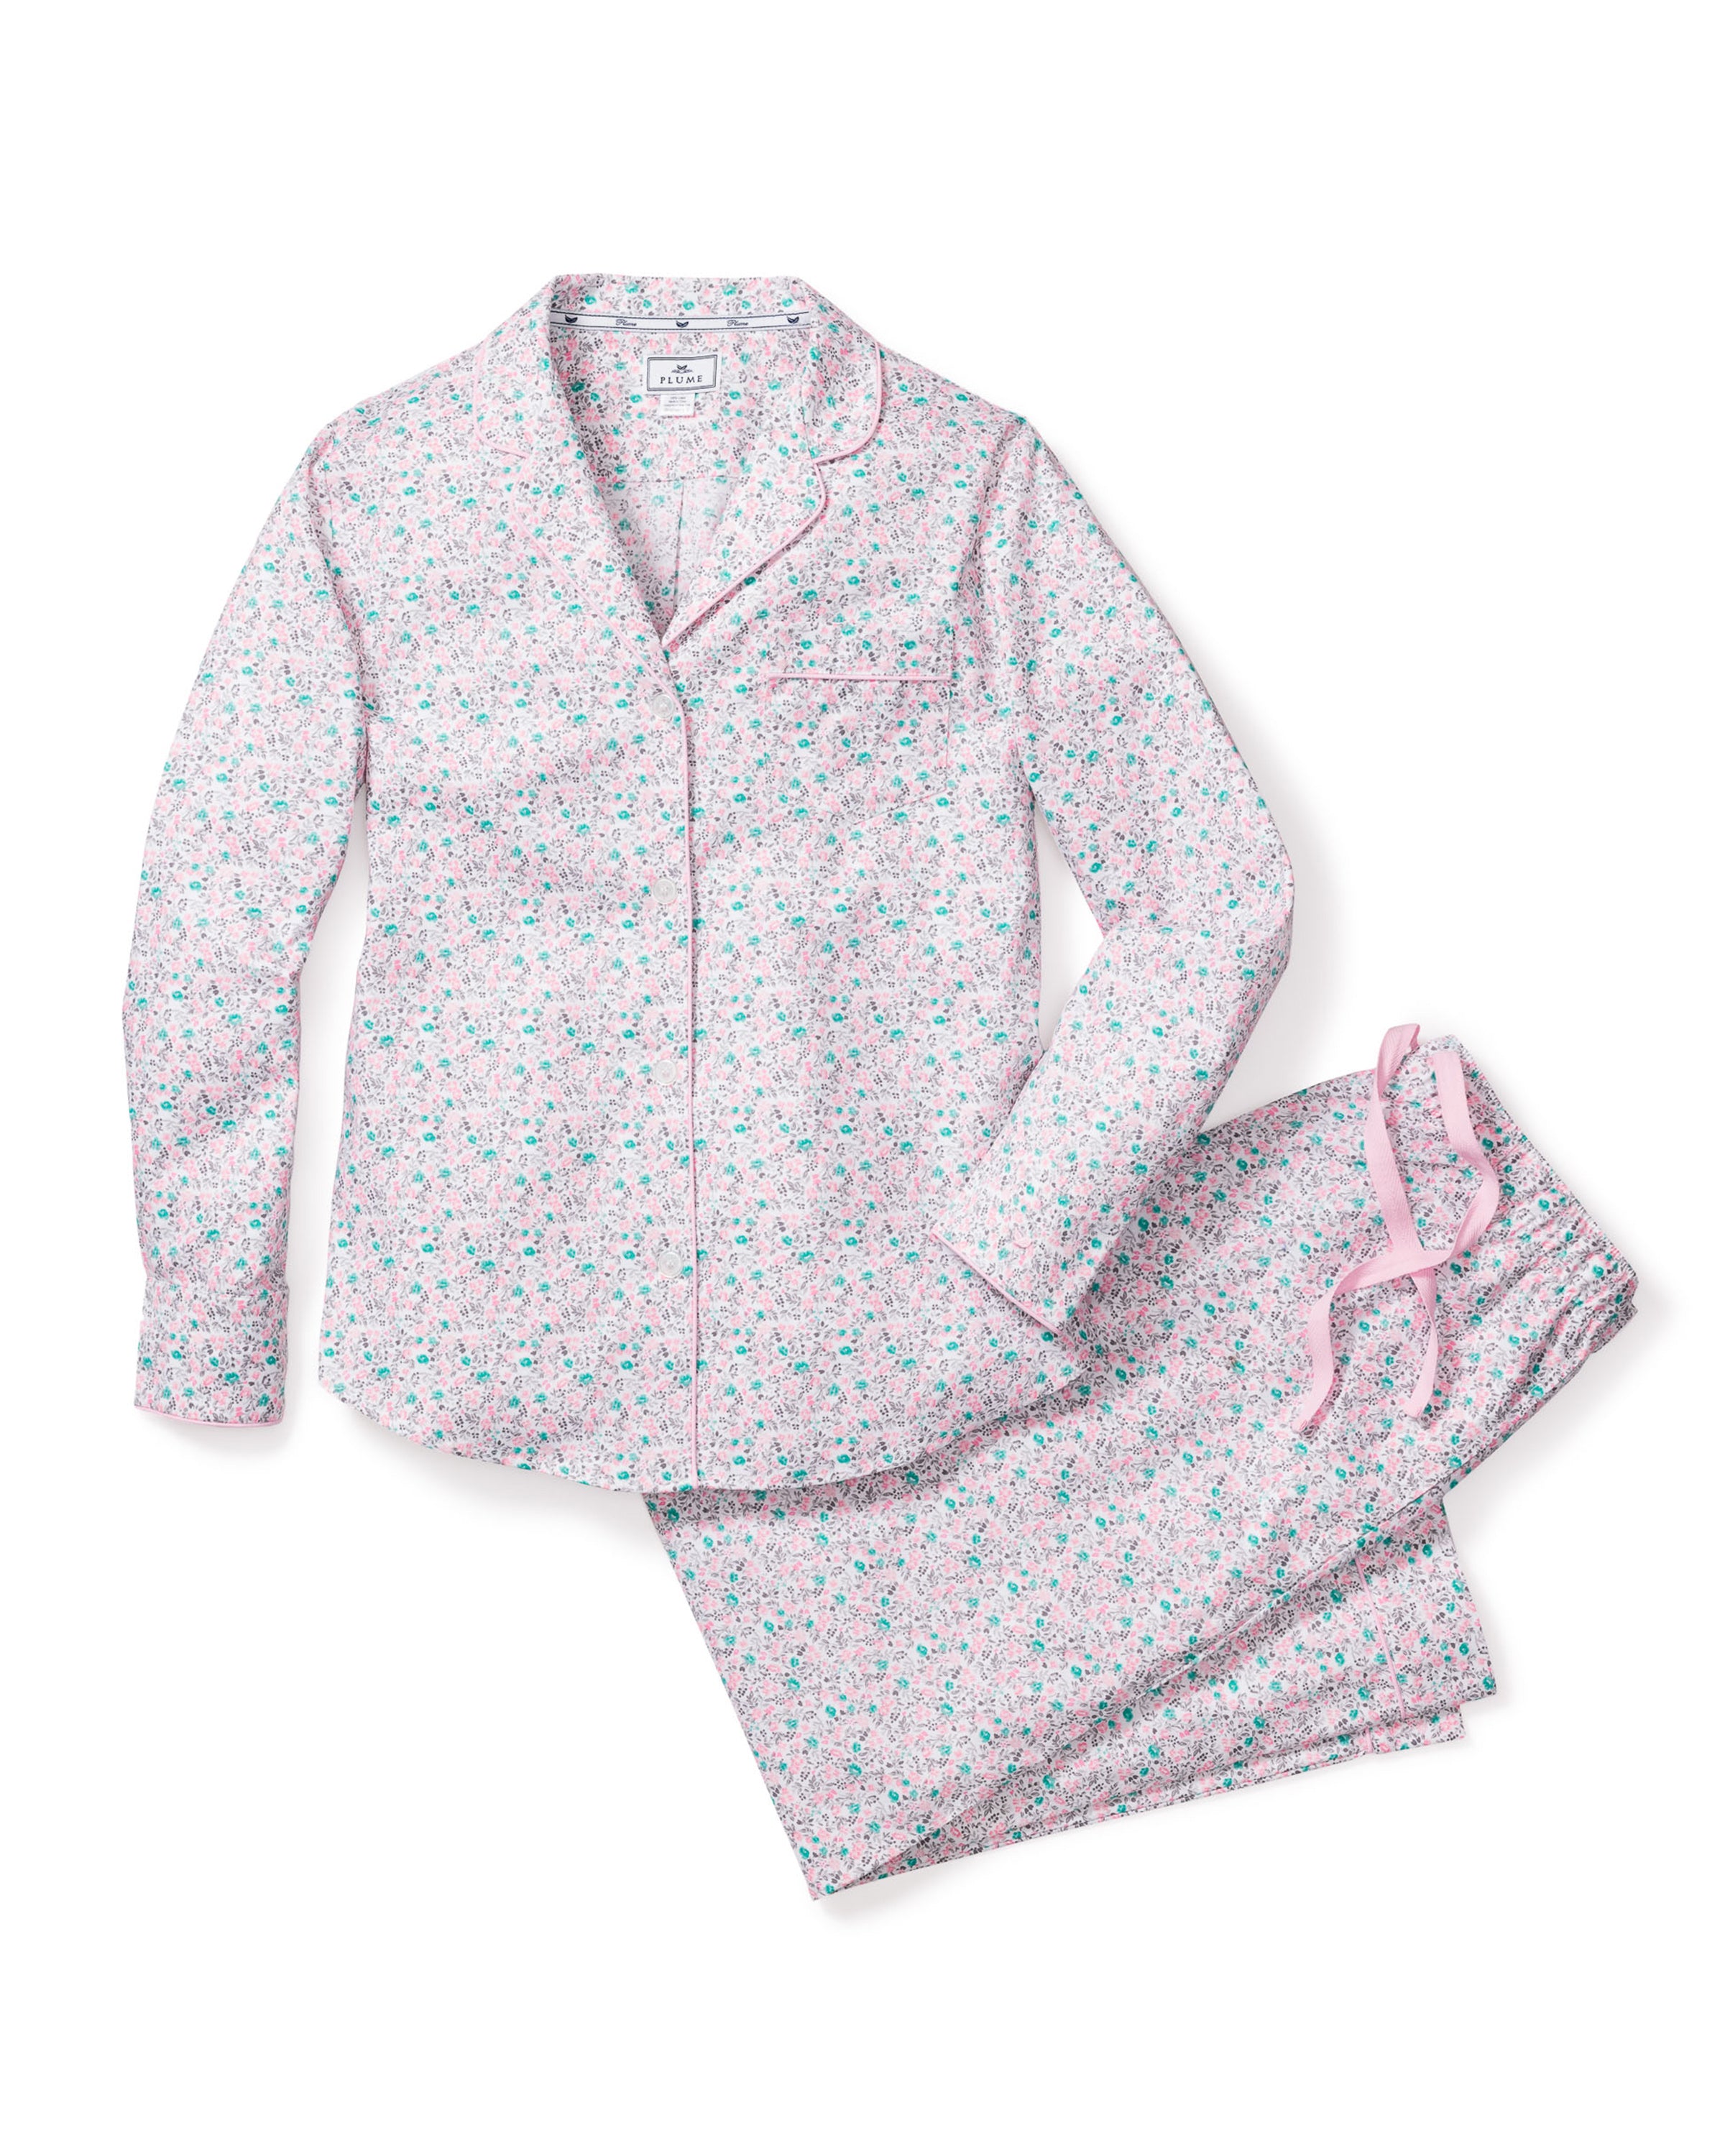 Chelsea Gardens Pyjama Set - Petite Plume